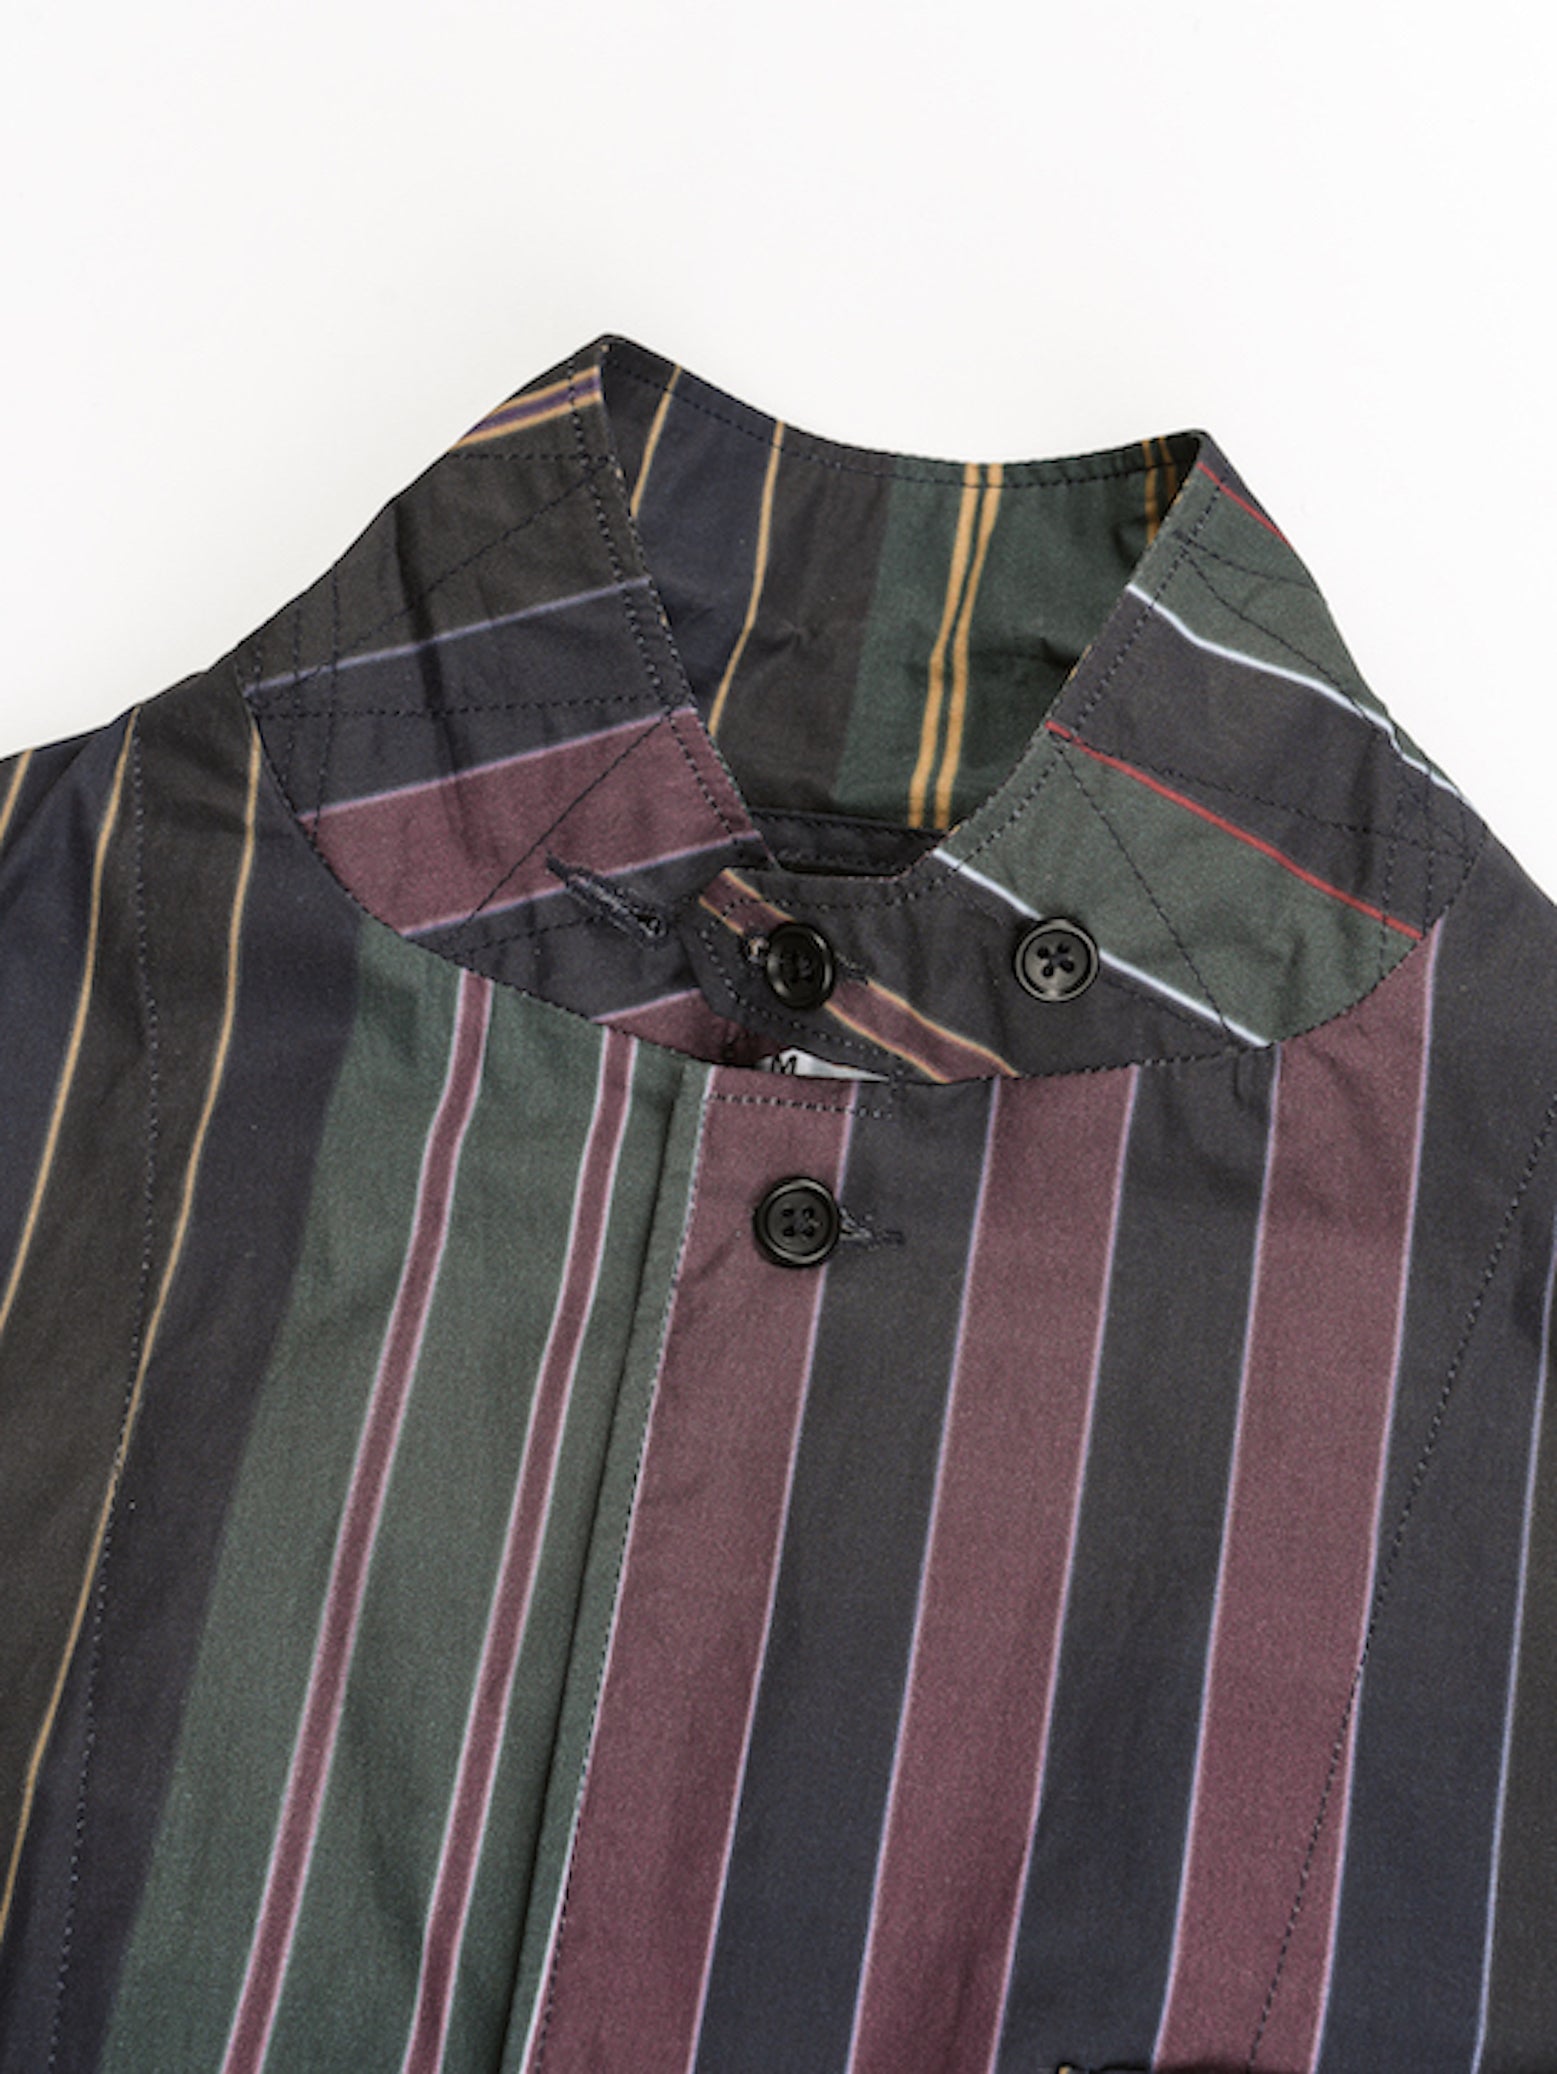 Loiter Jacket - Multi Color Regimental Stripe